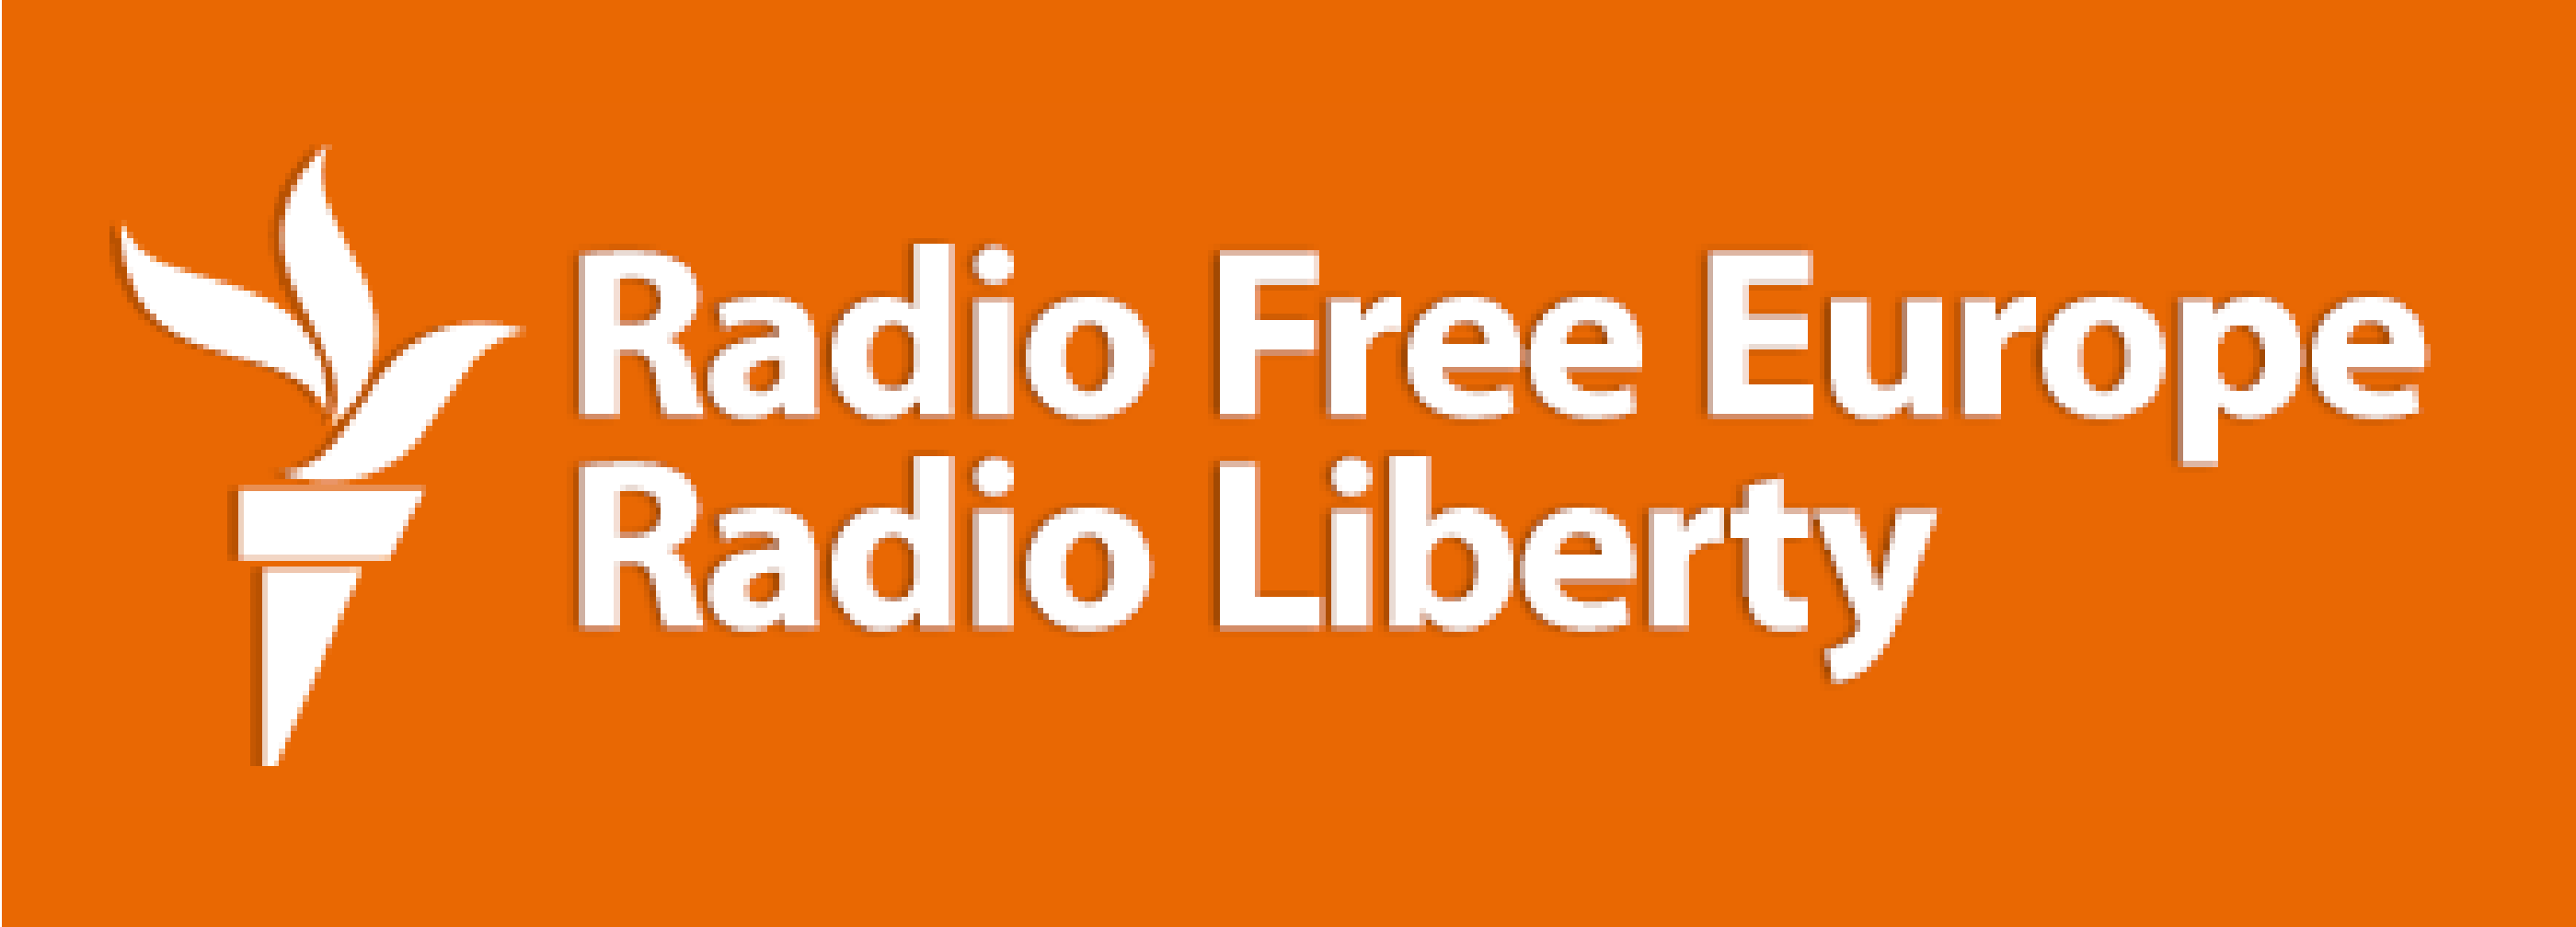 Радио свобода частота